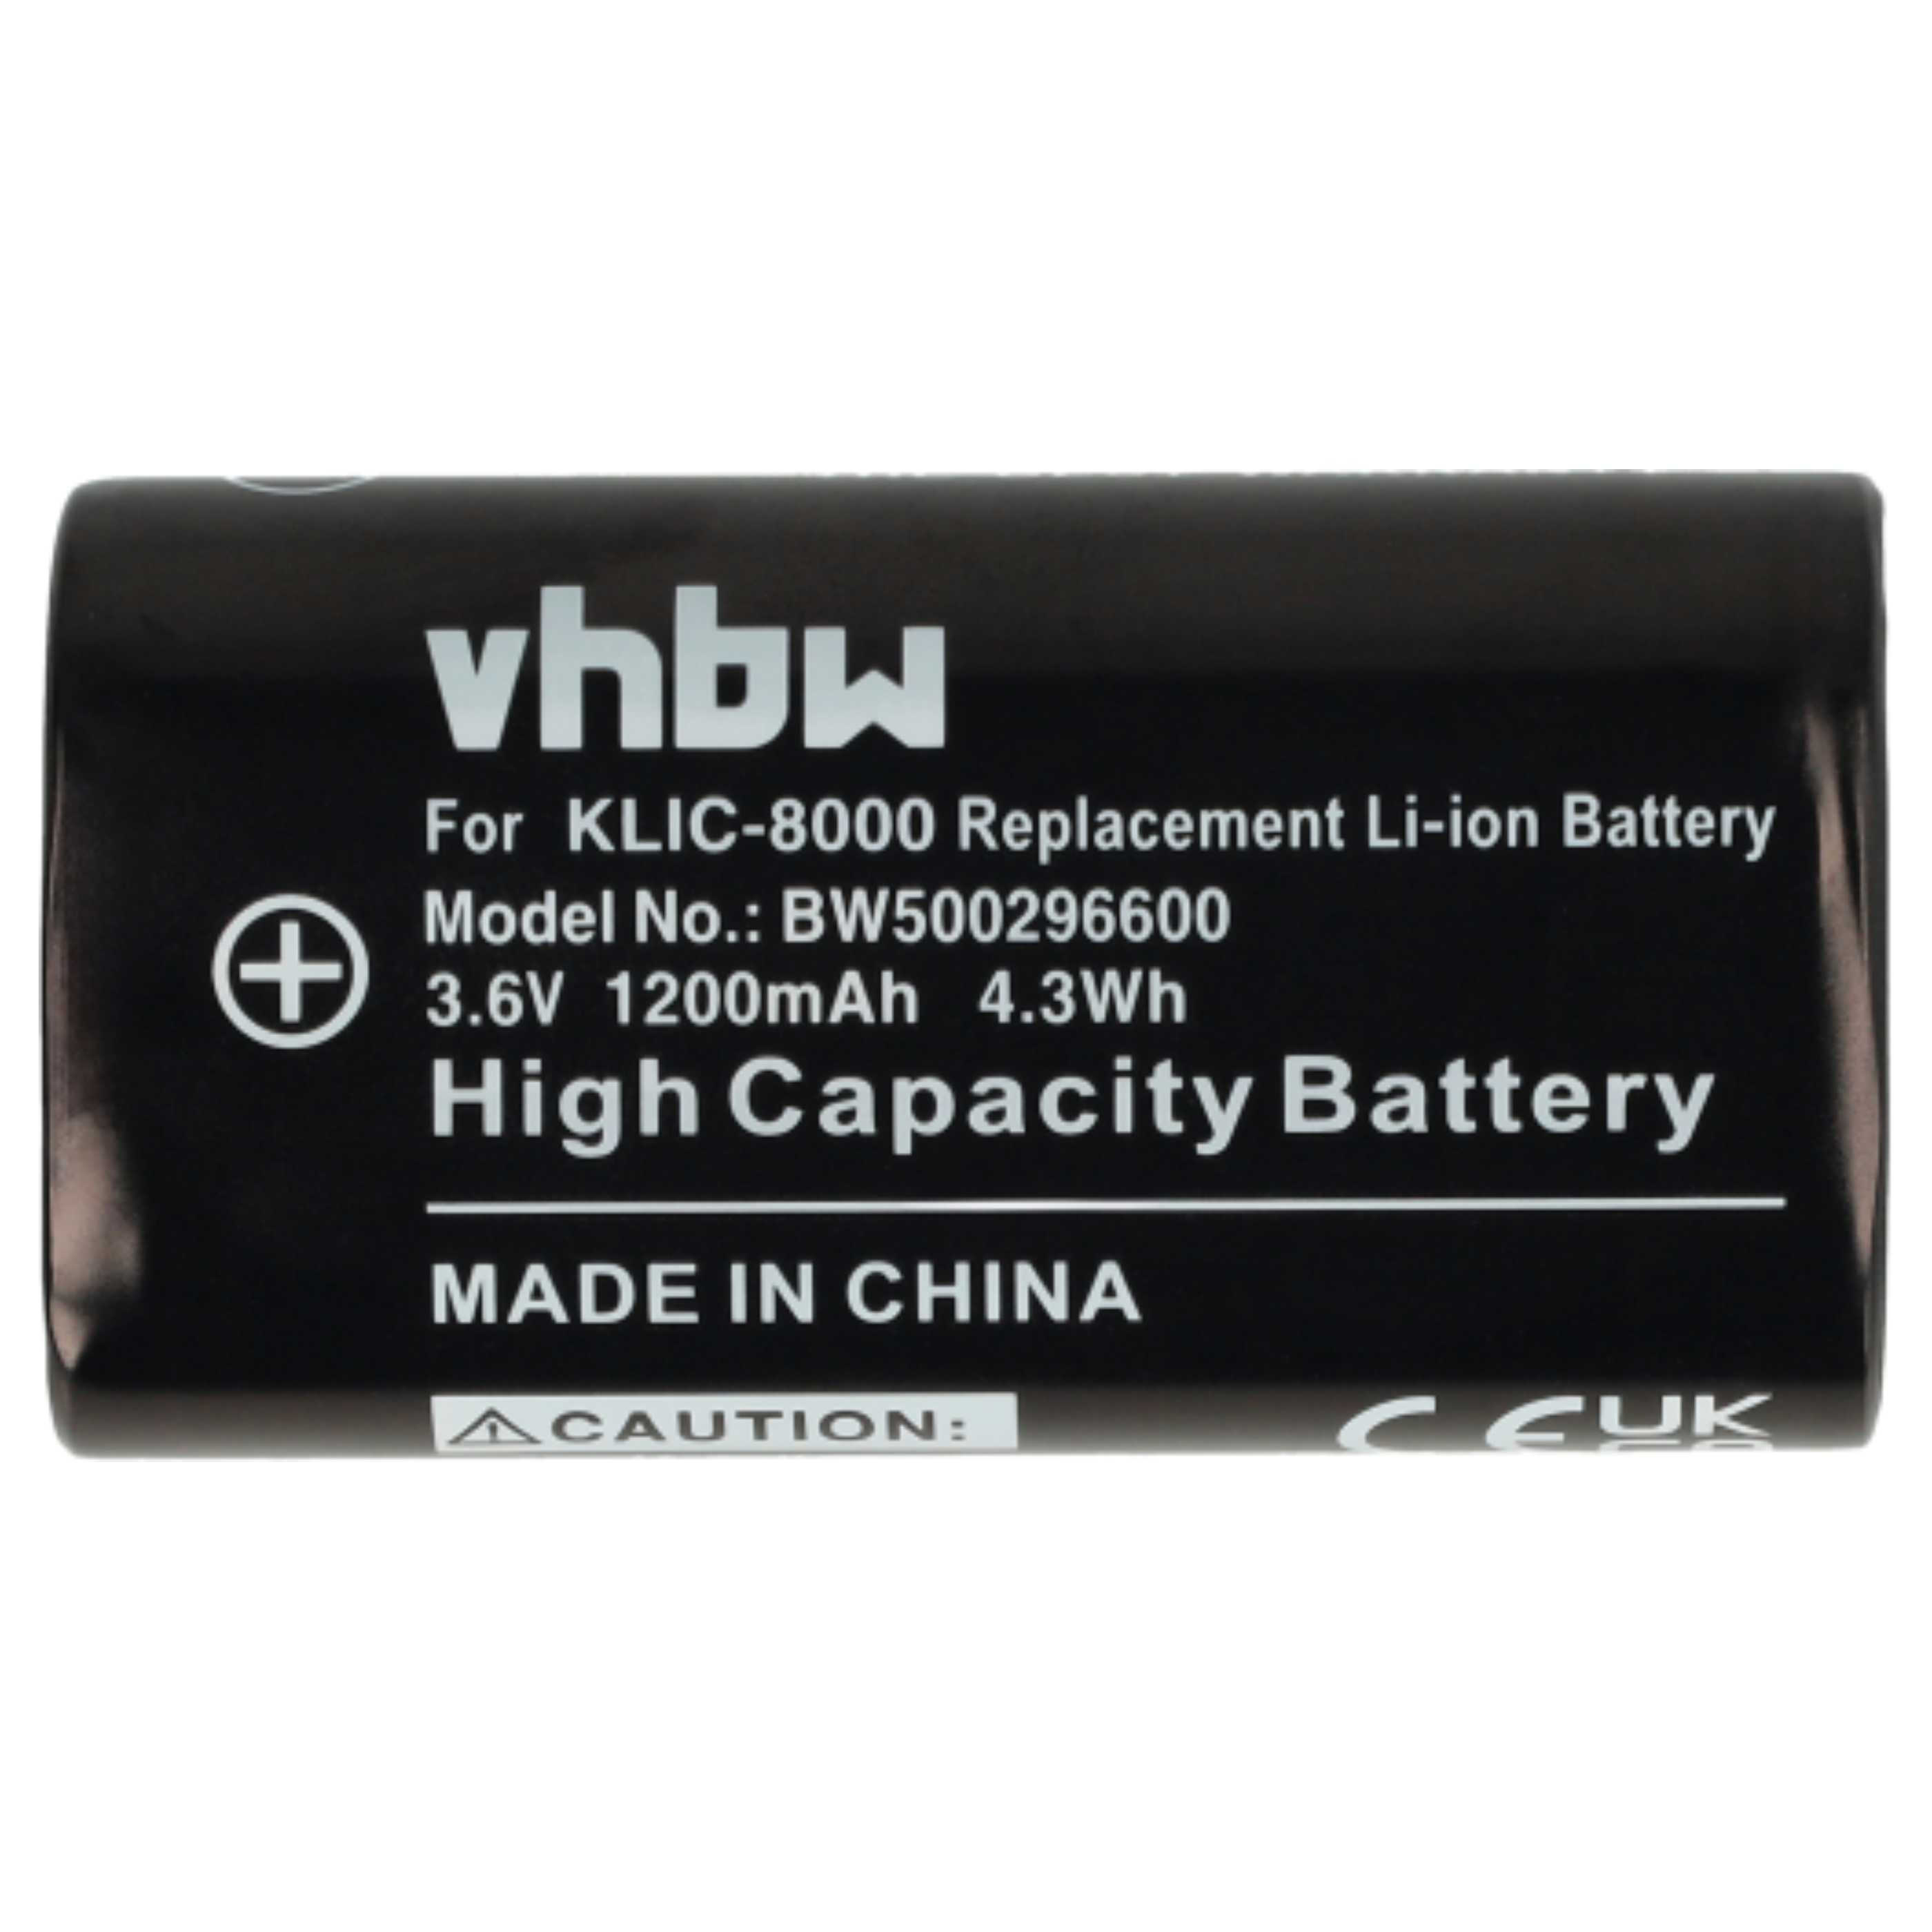 Batteria sostituisce Ricoh DB-50 per fotocamera - 1520mAh 3,6V Li-Ion